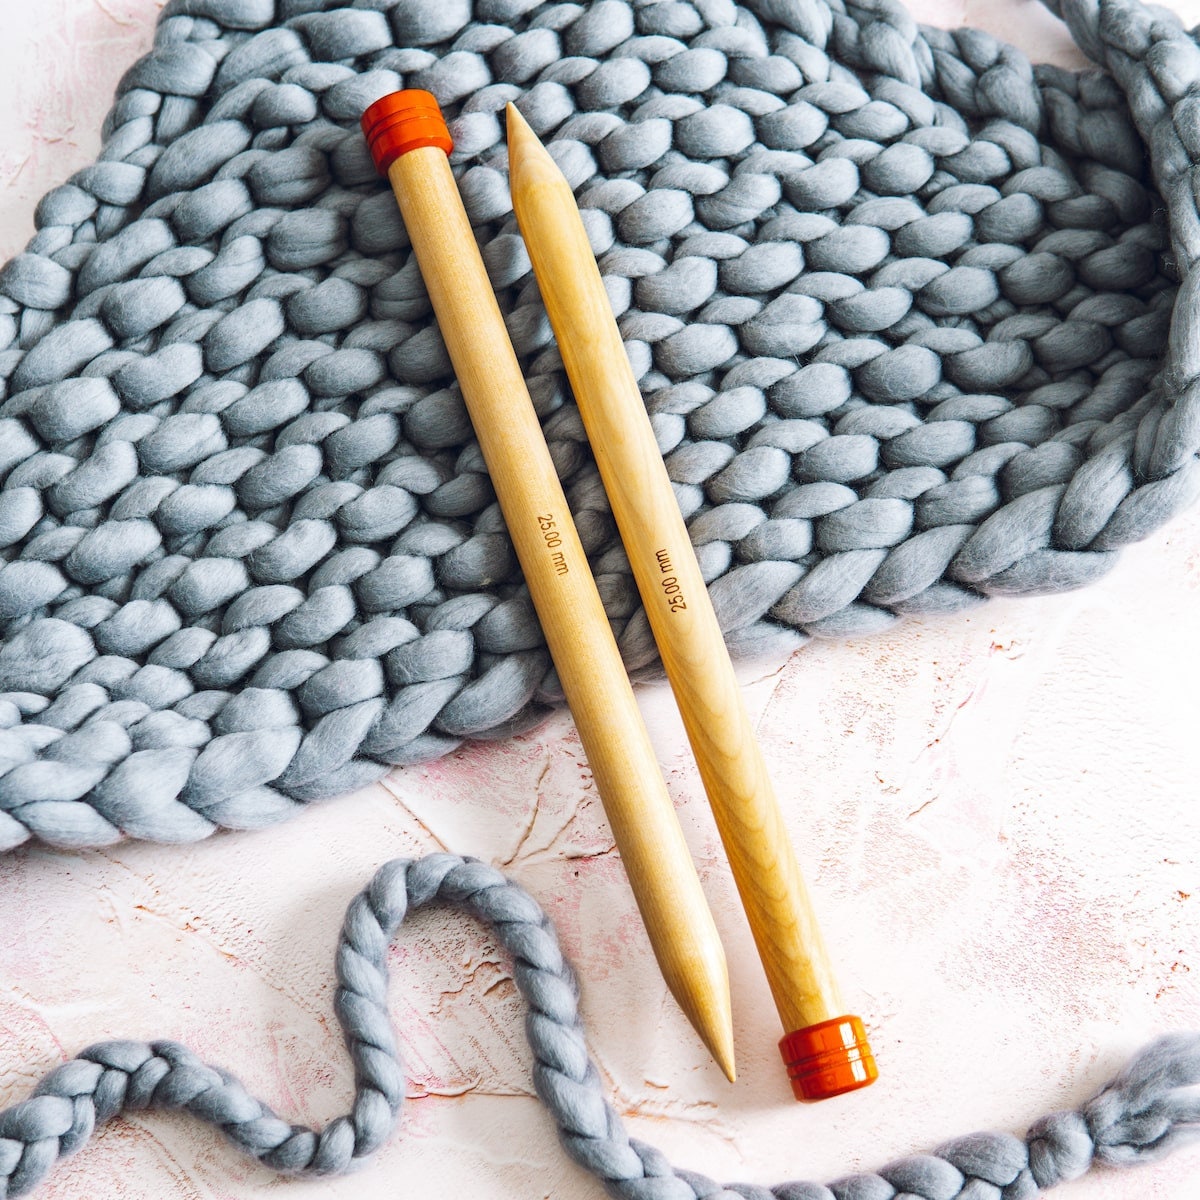 Handmade Luxury Wooden Knitting Needles - 25mm X 350mm Long